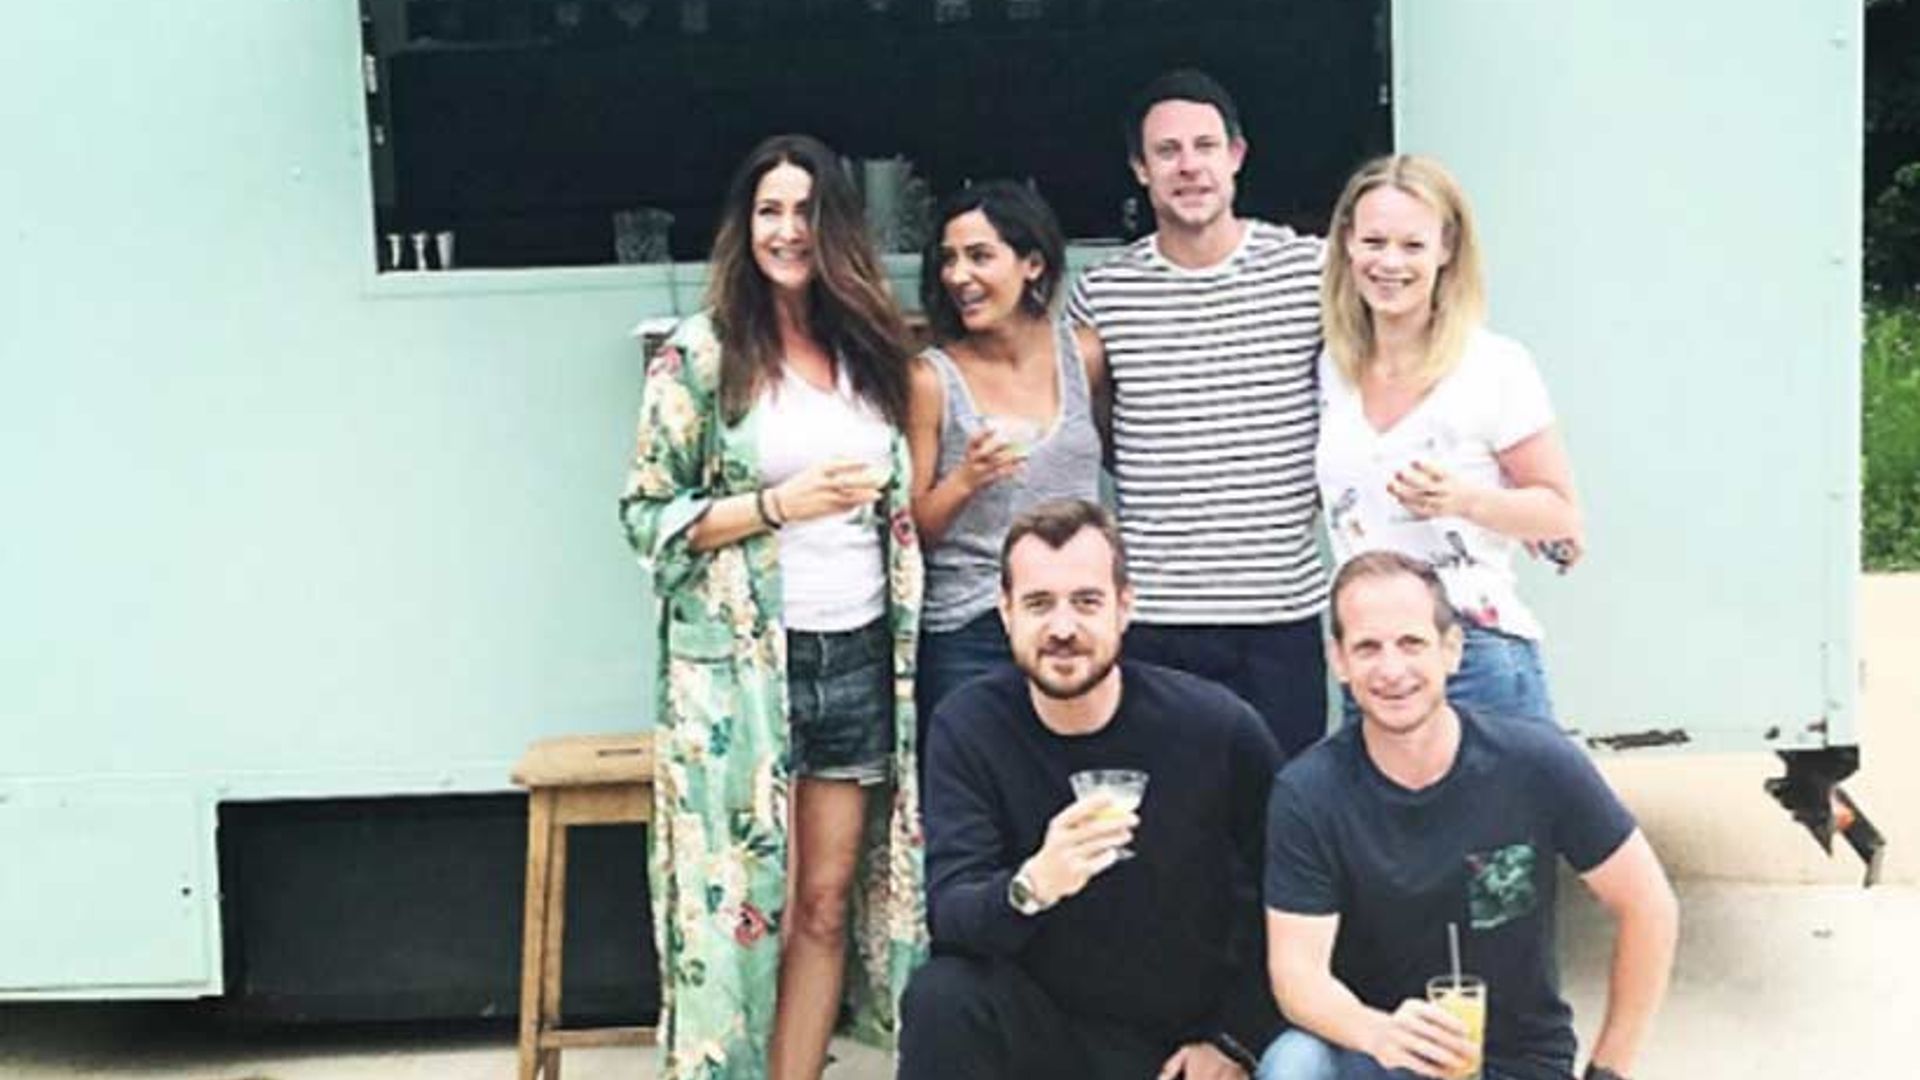 Frankie Bridge joins Lisa Snowdon and friends at celebrity hotspot Soho Farmhouse